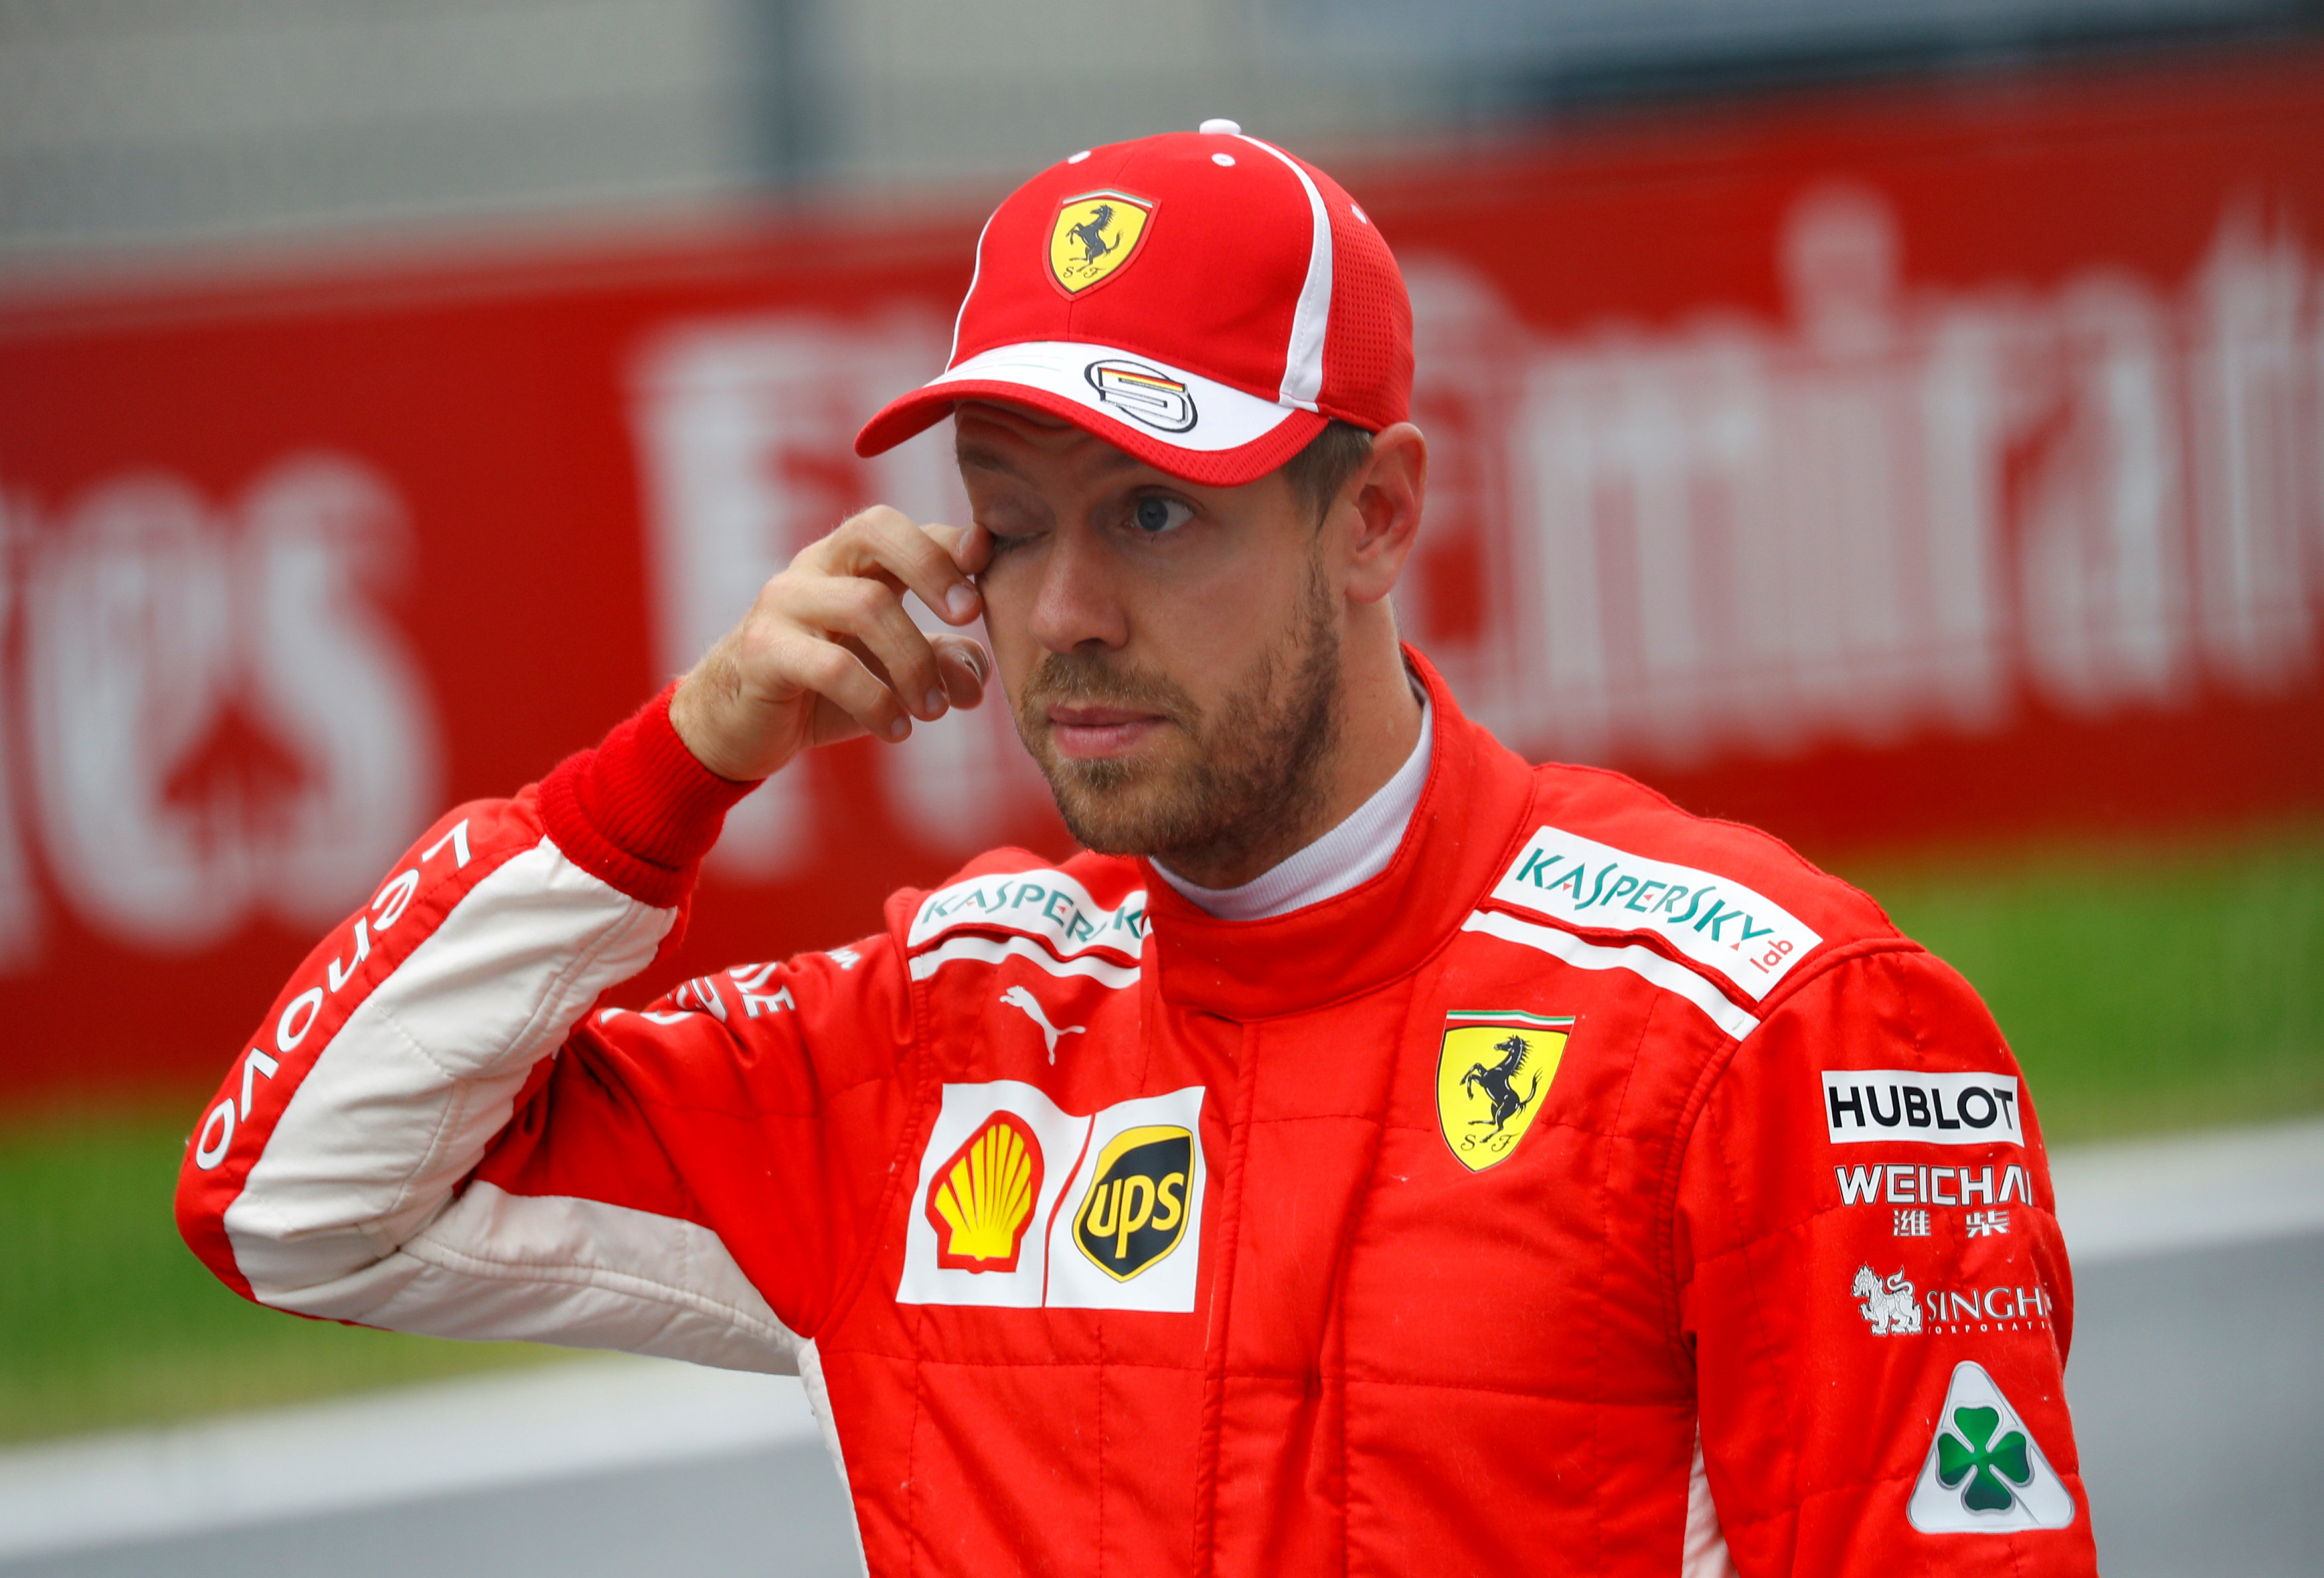 Motorsport: Andretti says stewards got it wrong on Vettel penalty